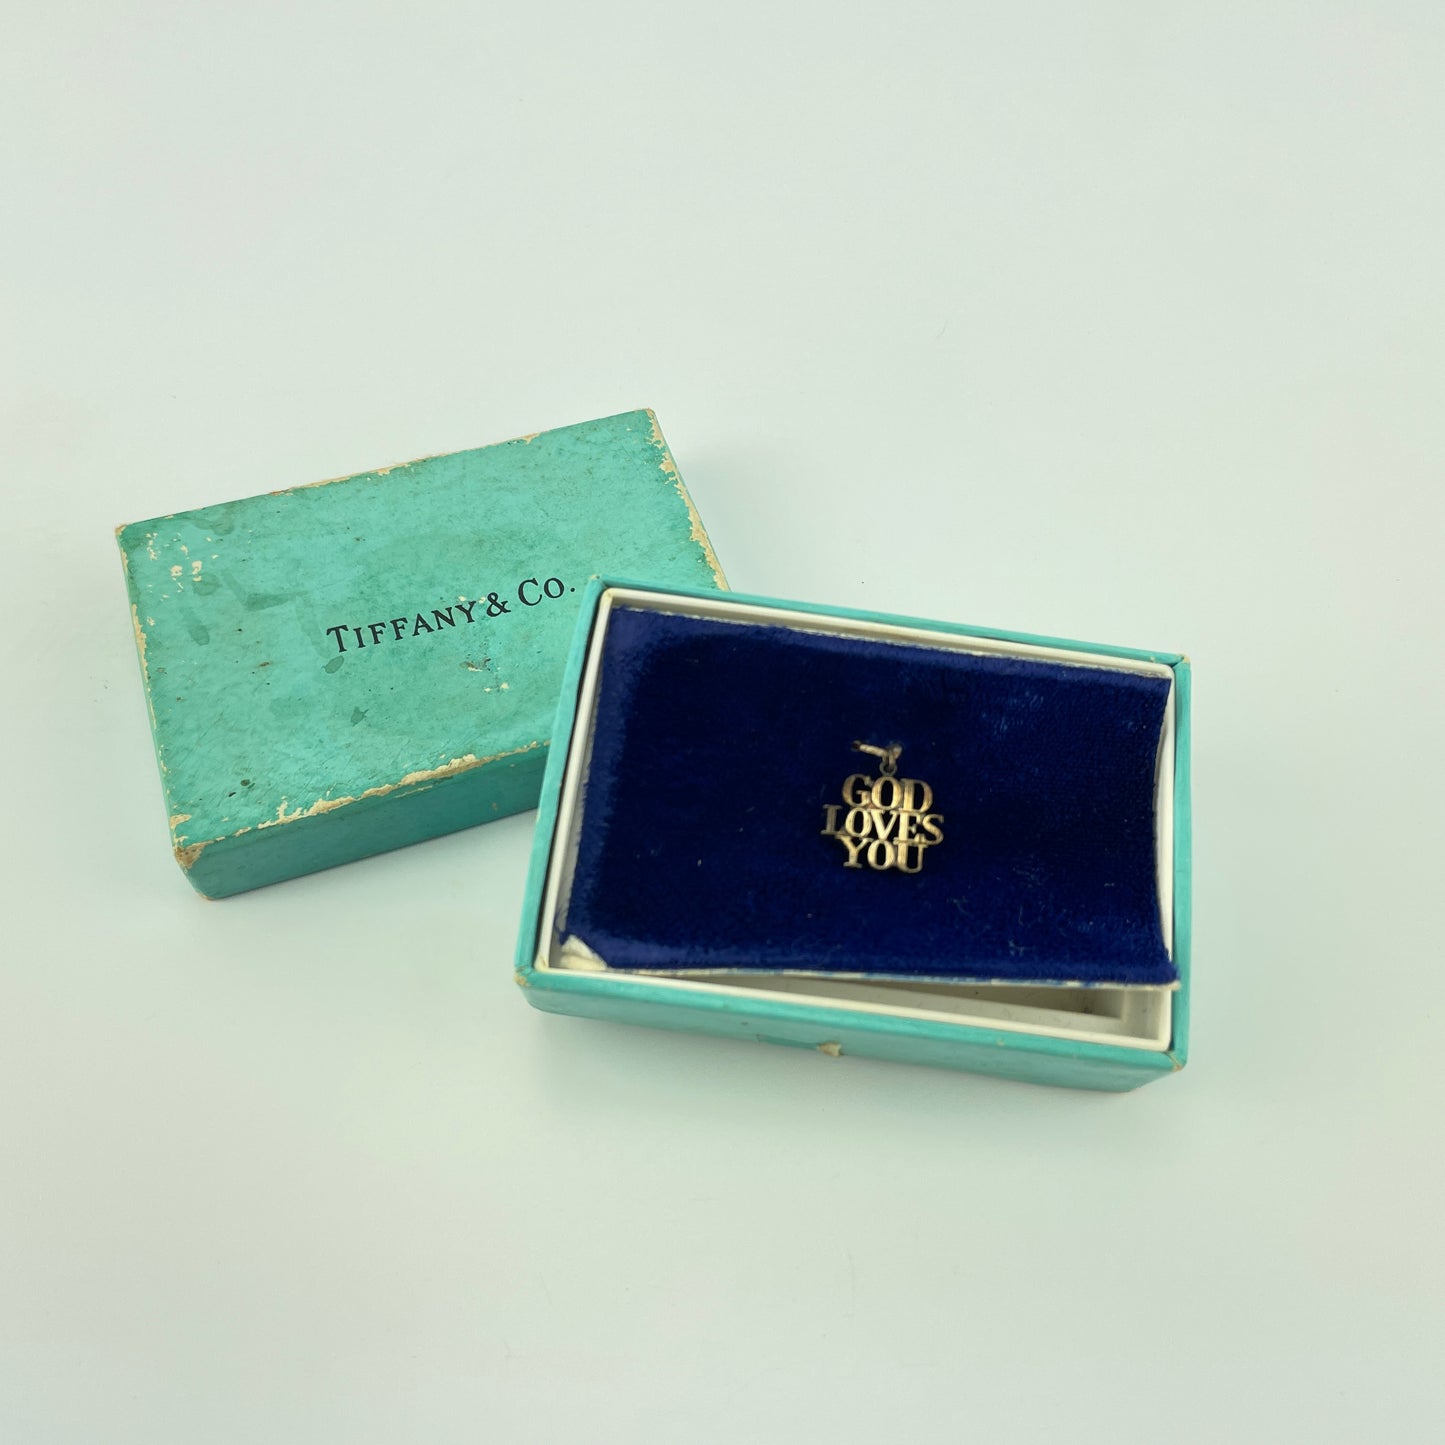 Lot 57- Vintage Tiffany & Co. “God Loves You” Pendant